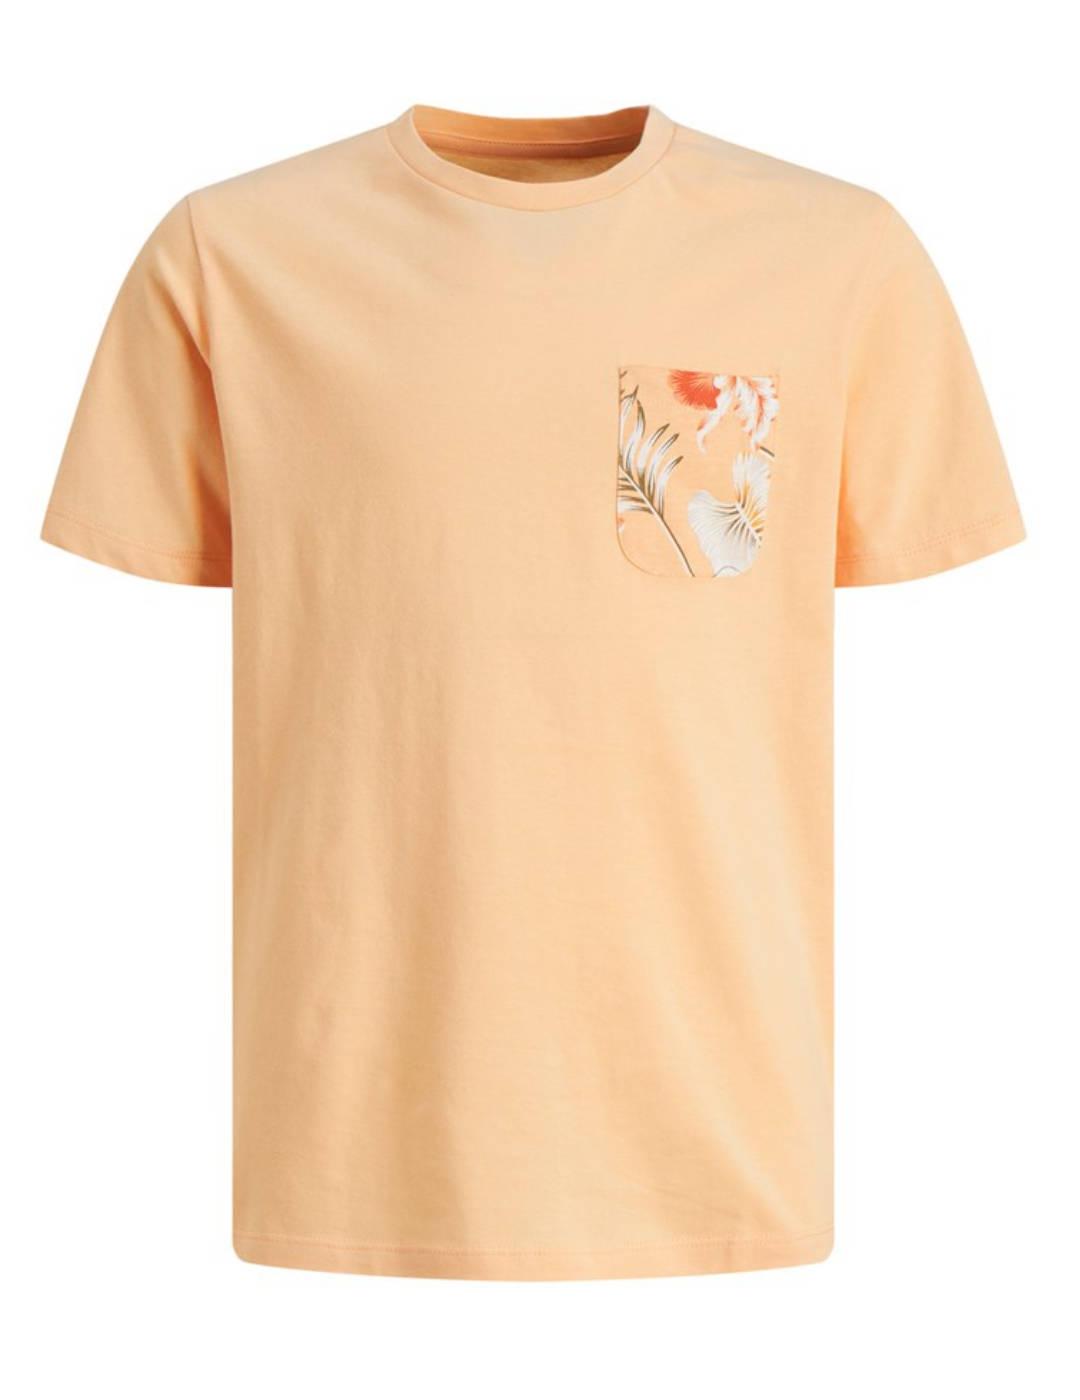 Camiseta Jack&Jones Chill naranja manga corta para niño